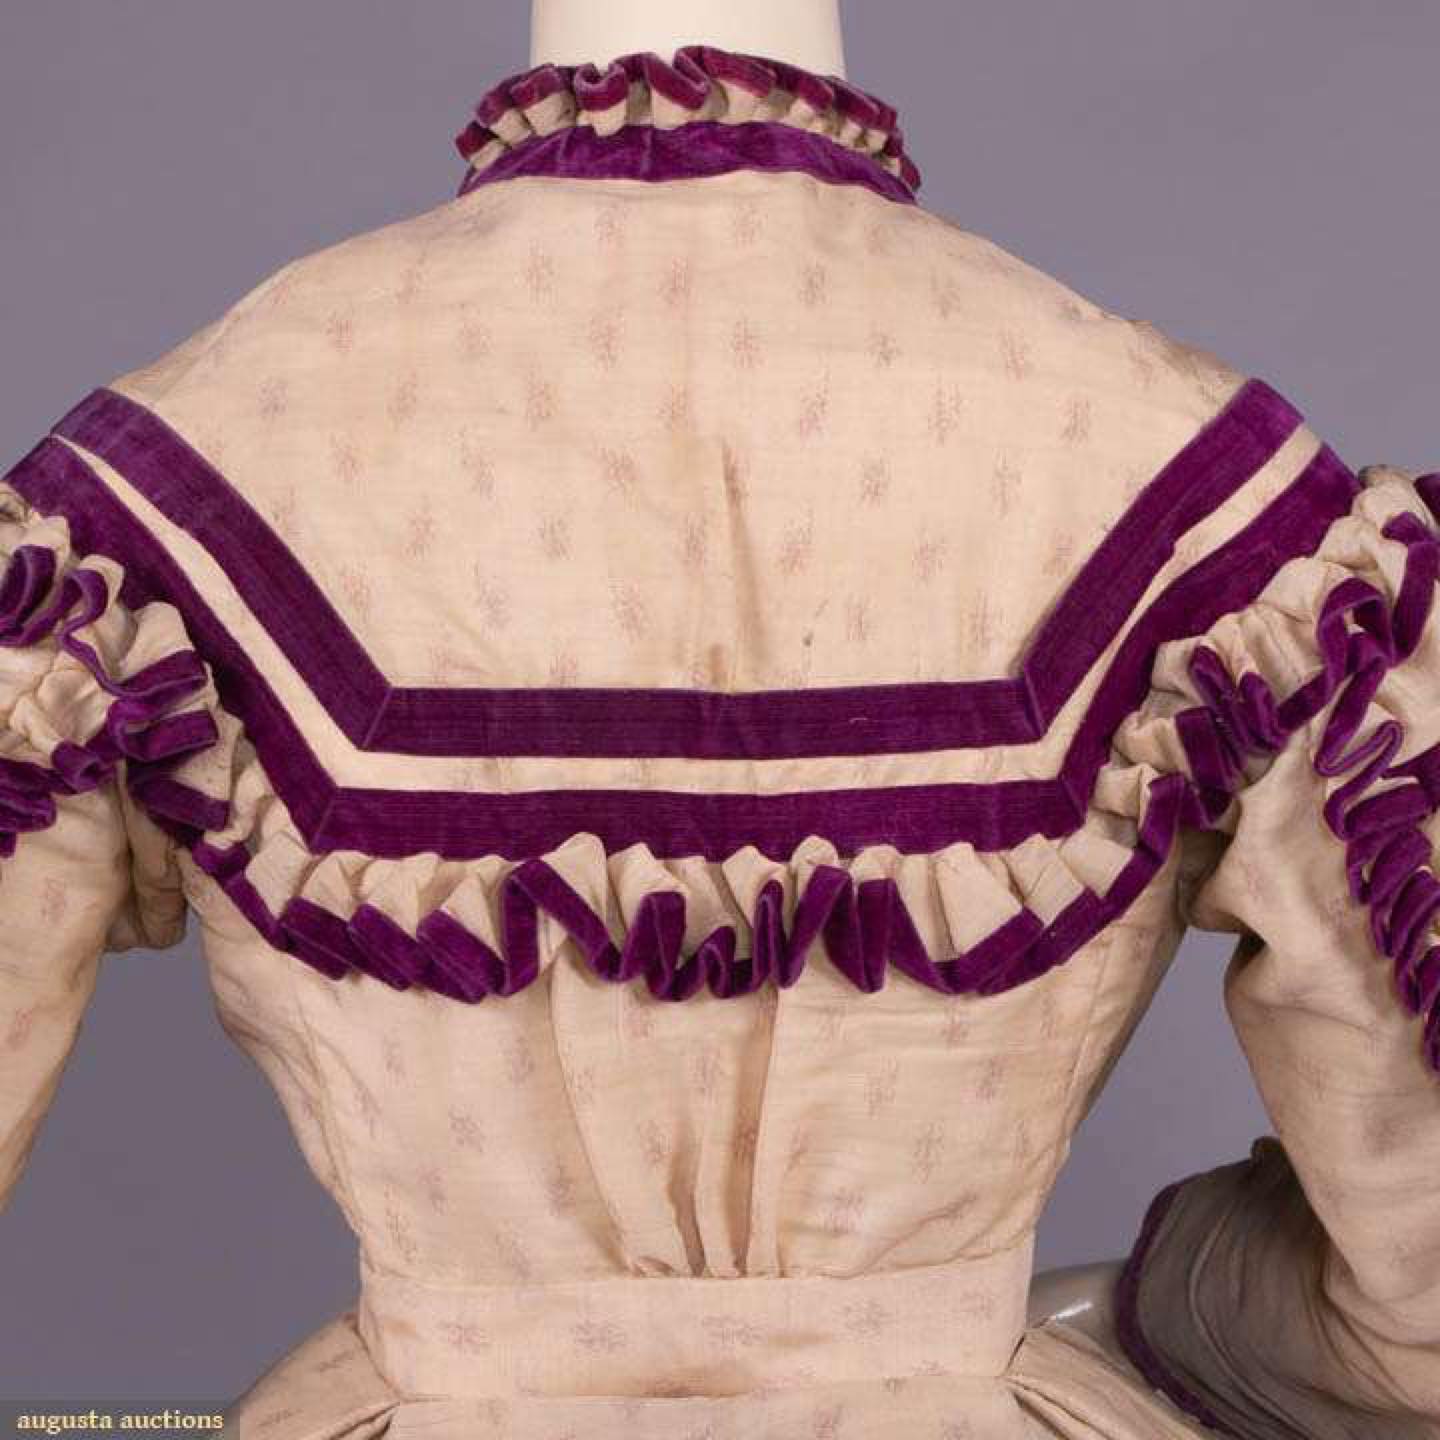 Day dress of figured barège trimmed in purple silk velvet ribbon, 1866-1867, sold by Augusta Auctions, Feb 2021